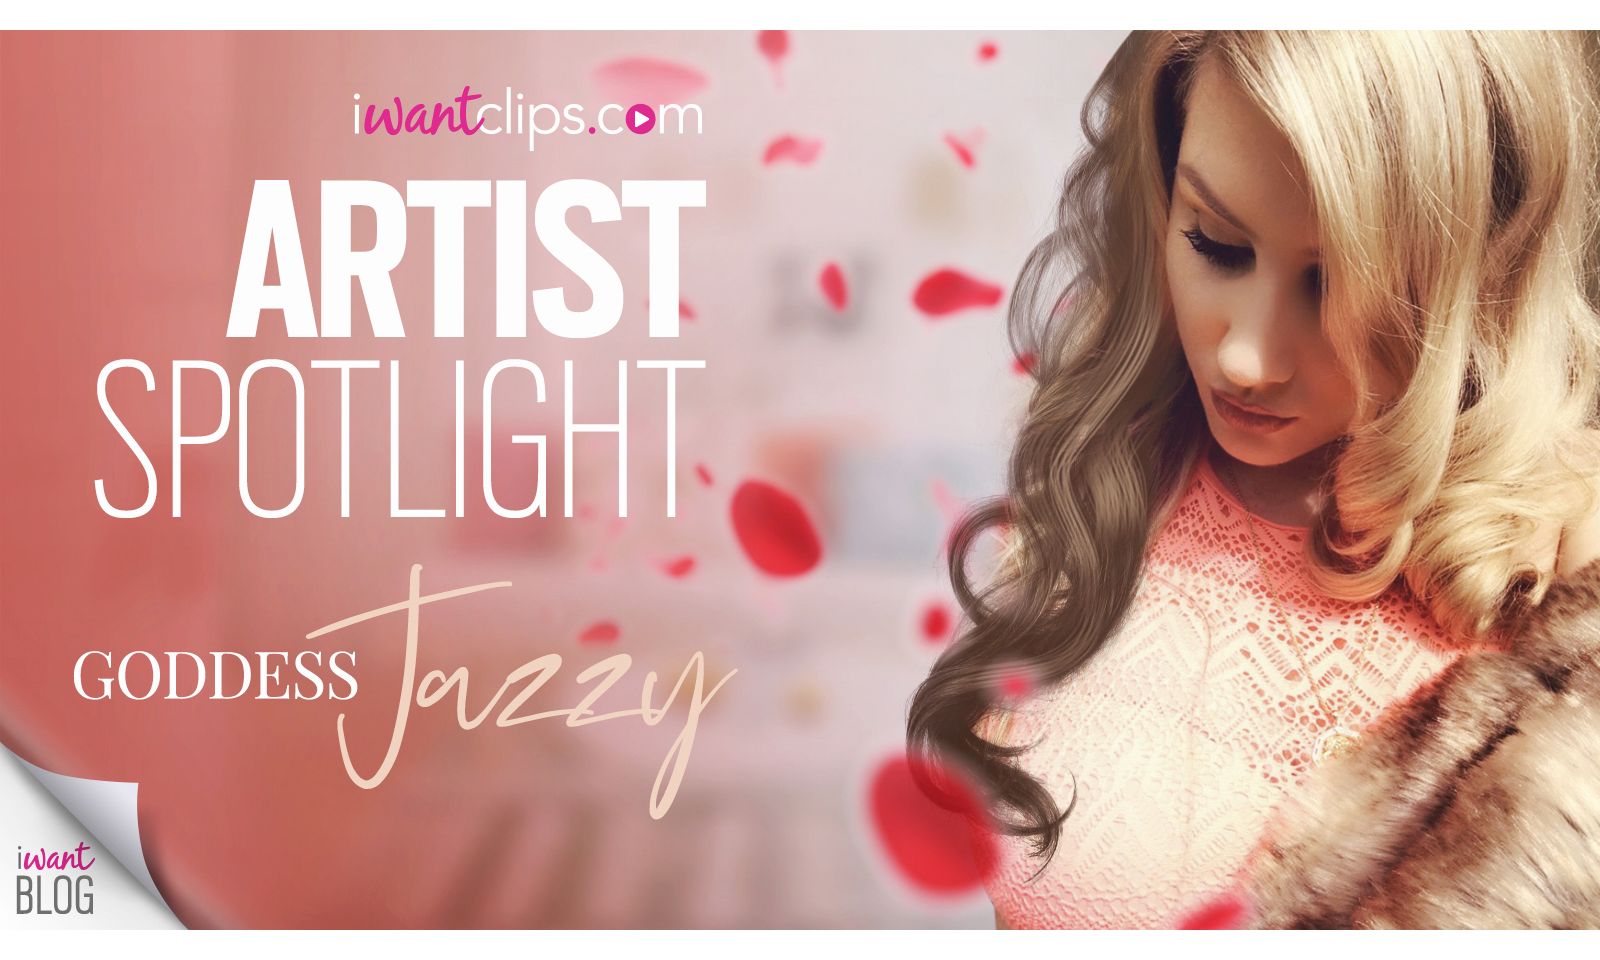 Goddess Jazzy Featured in iWantClips’ Artist Spotlight